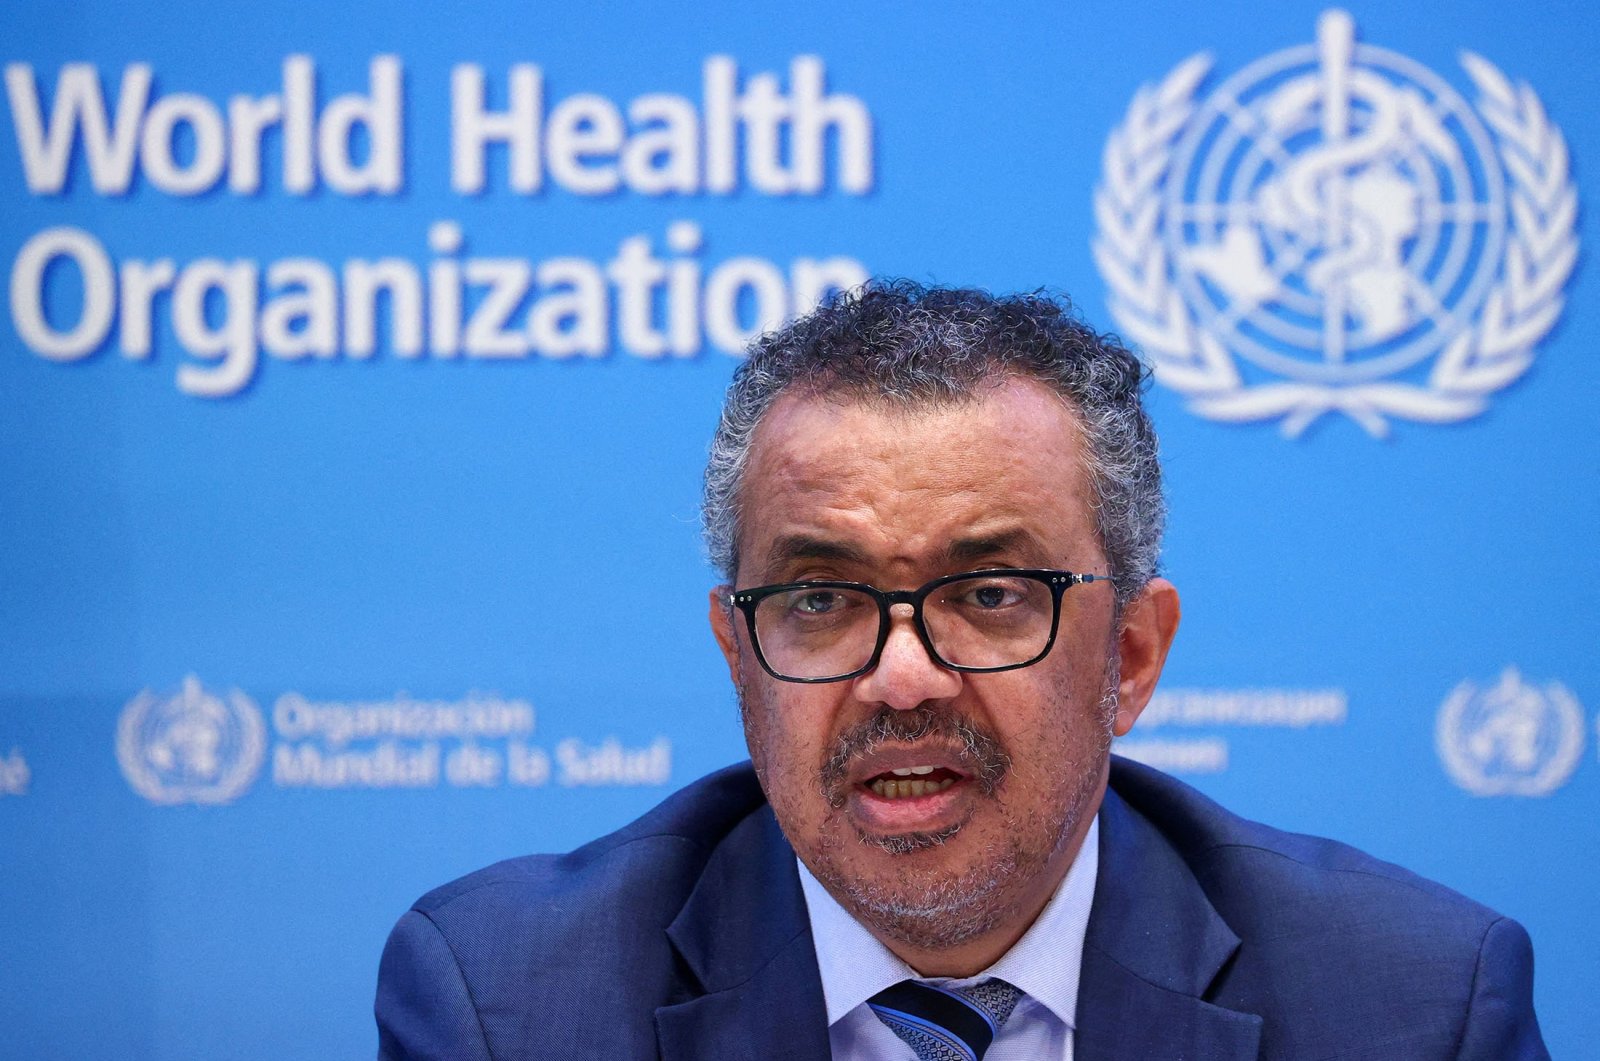 Director-General of the World Health Organization (WHO) Tedros Adhanom Ghebreyesus speaks during a news conference in Geneva, Switzerland, Dec. 20, 2021. (Reuters Photo)